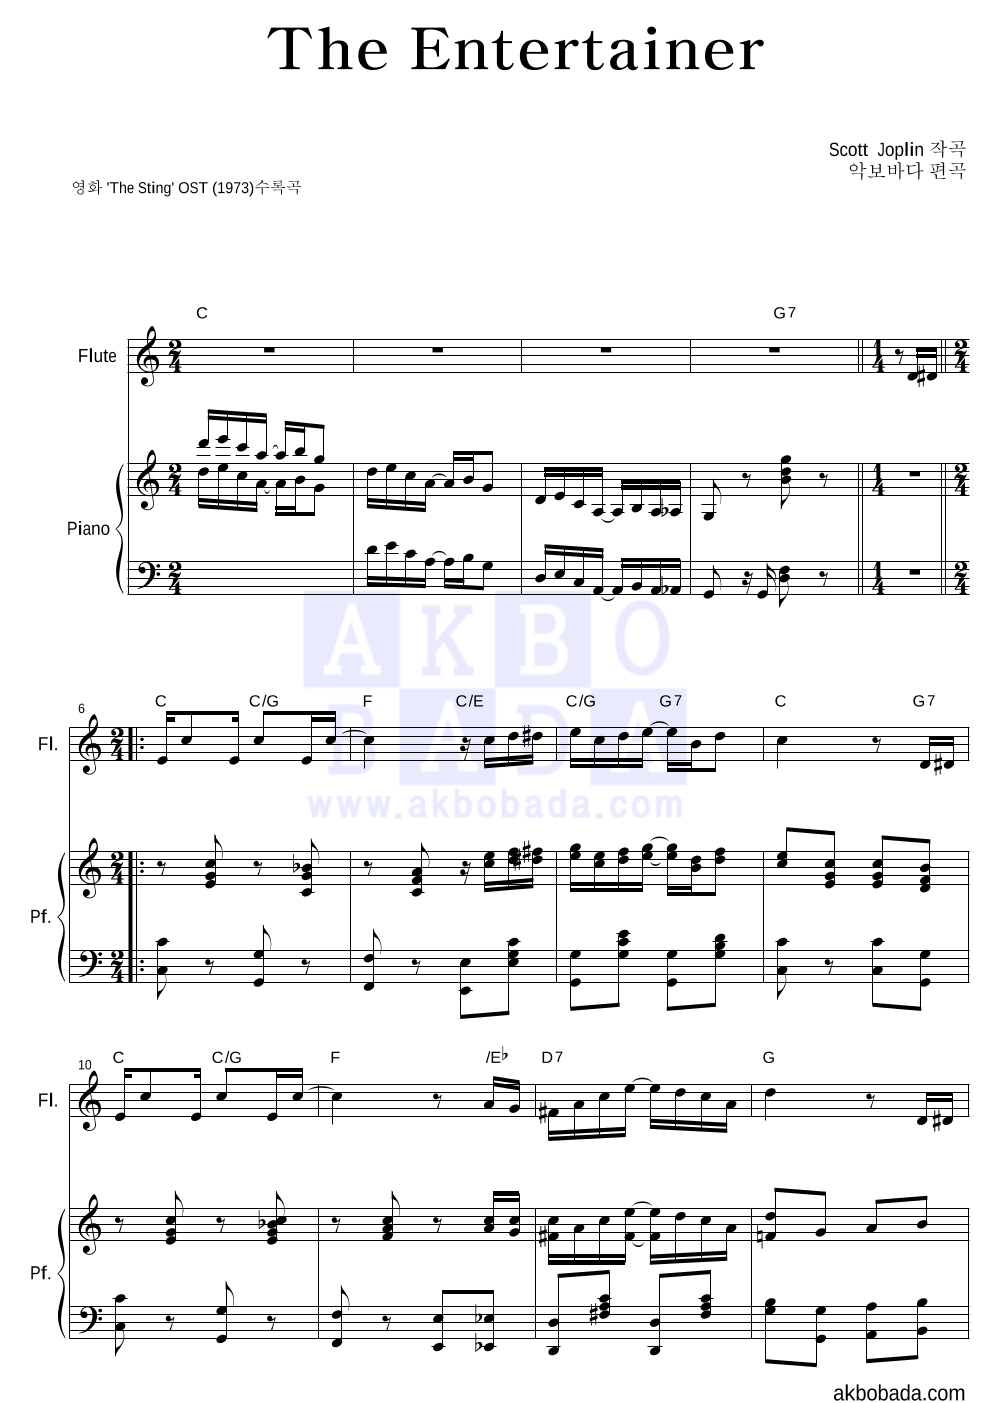 Scott Joplin - The Entertainer 플룻&피아노 악보 